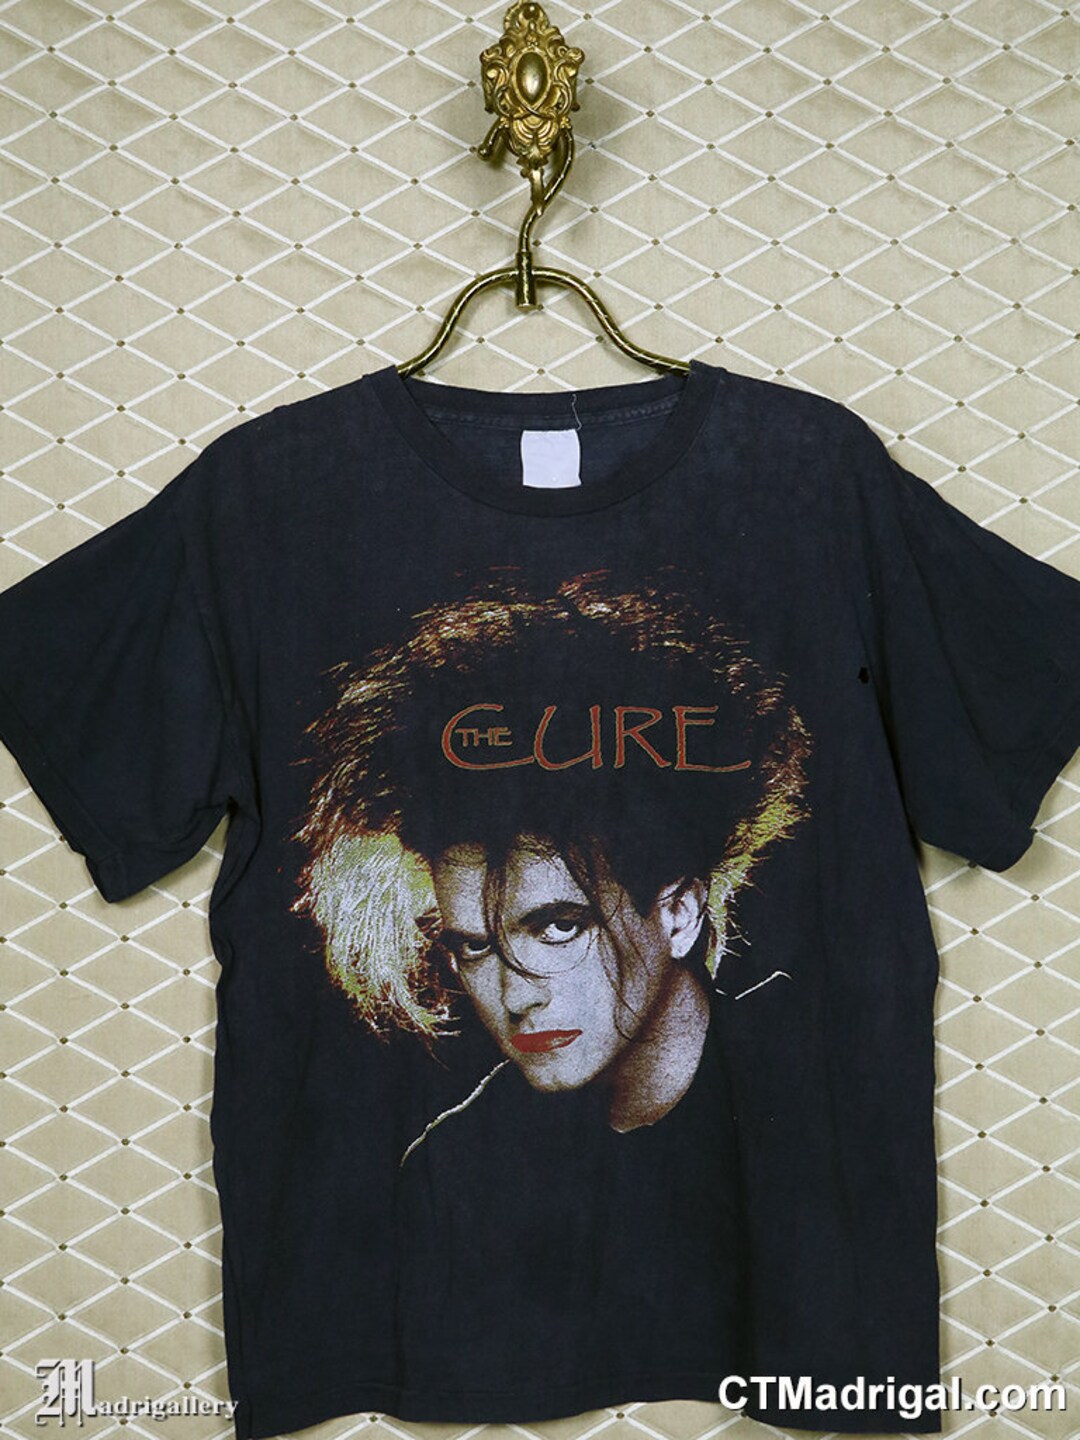 The Cure T-shirt Vintage Rare Black Tee Shirt Robert Smith - Etsy